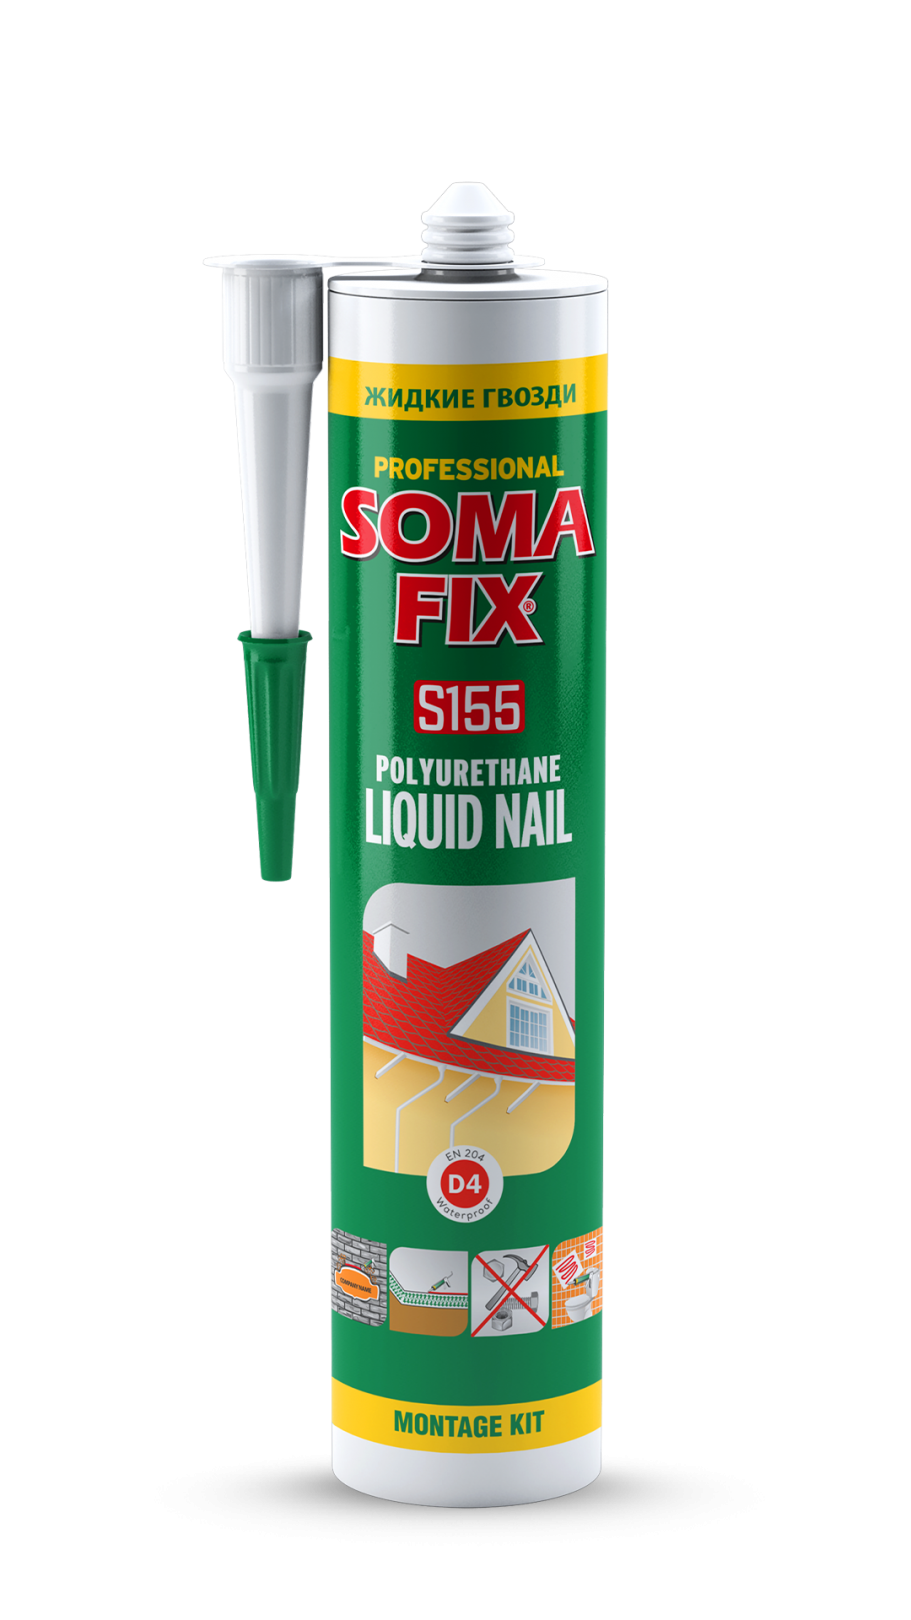 Somafix Liquid Nail (Polyurethane Based) S155